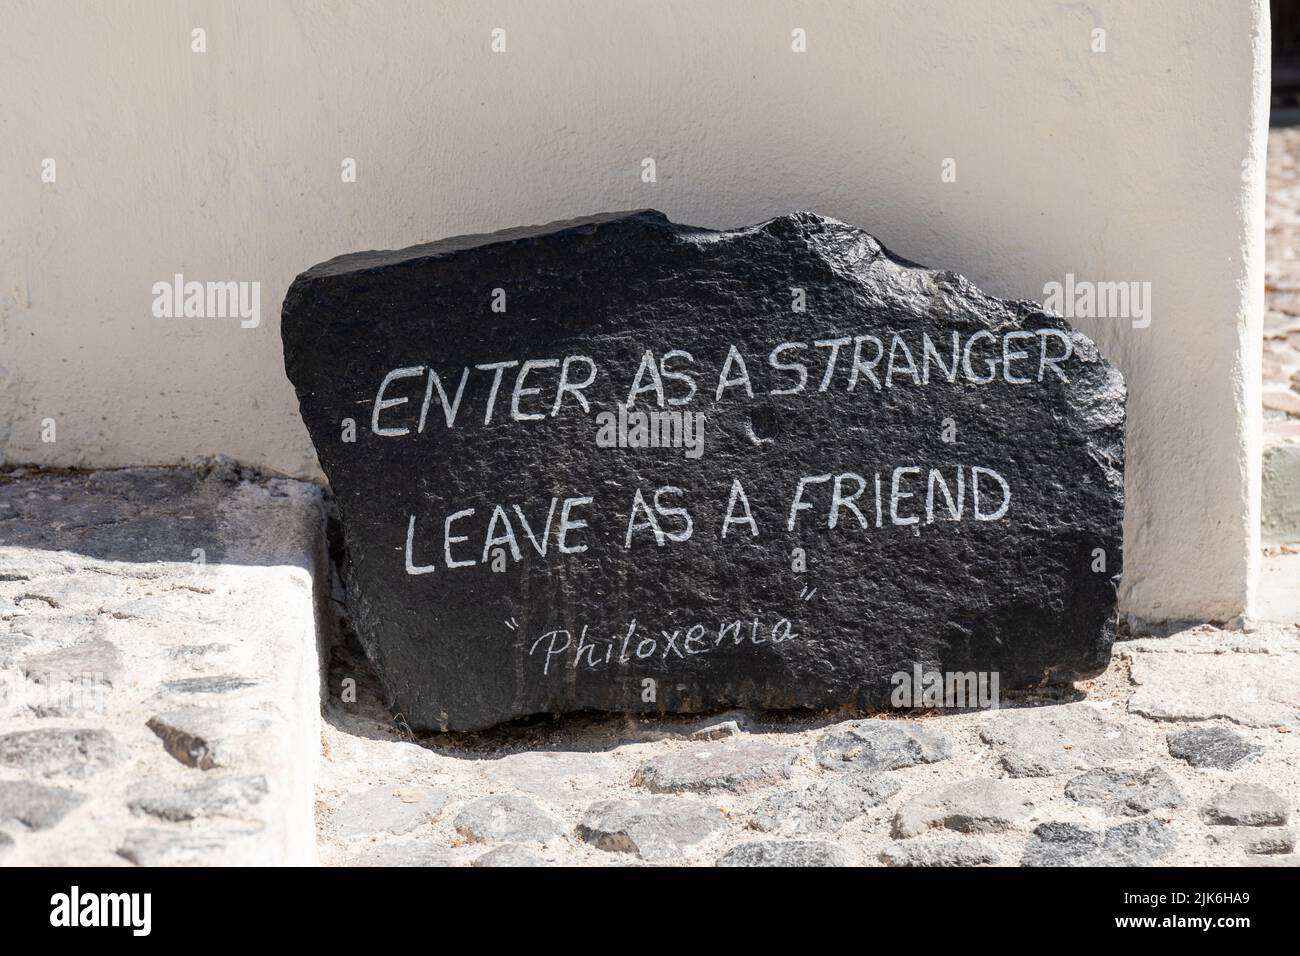 Entrar como un Stranger Deja como un Amigo - Philoxenia, un mensaje de bienvenida en Pyrgos Village, Santorini, Grecia, Europa Foto de stock